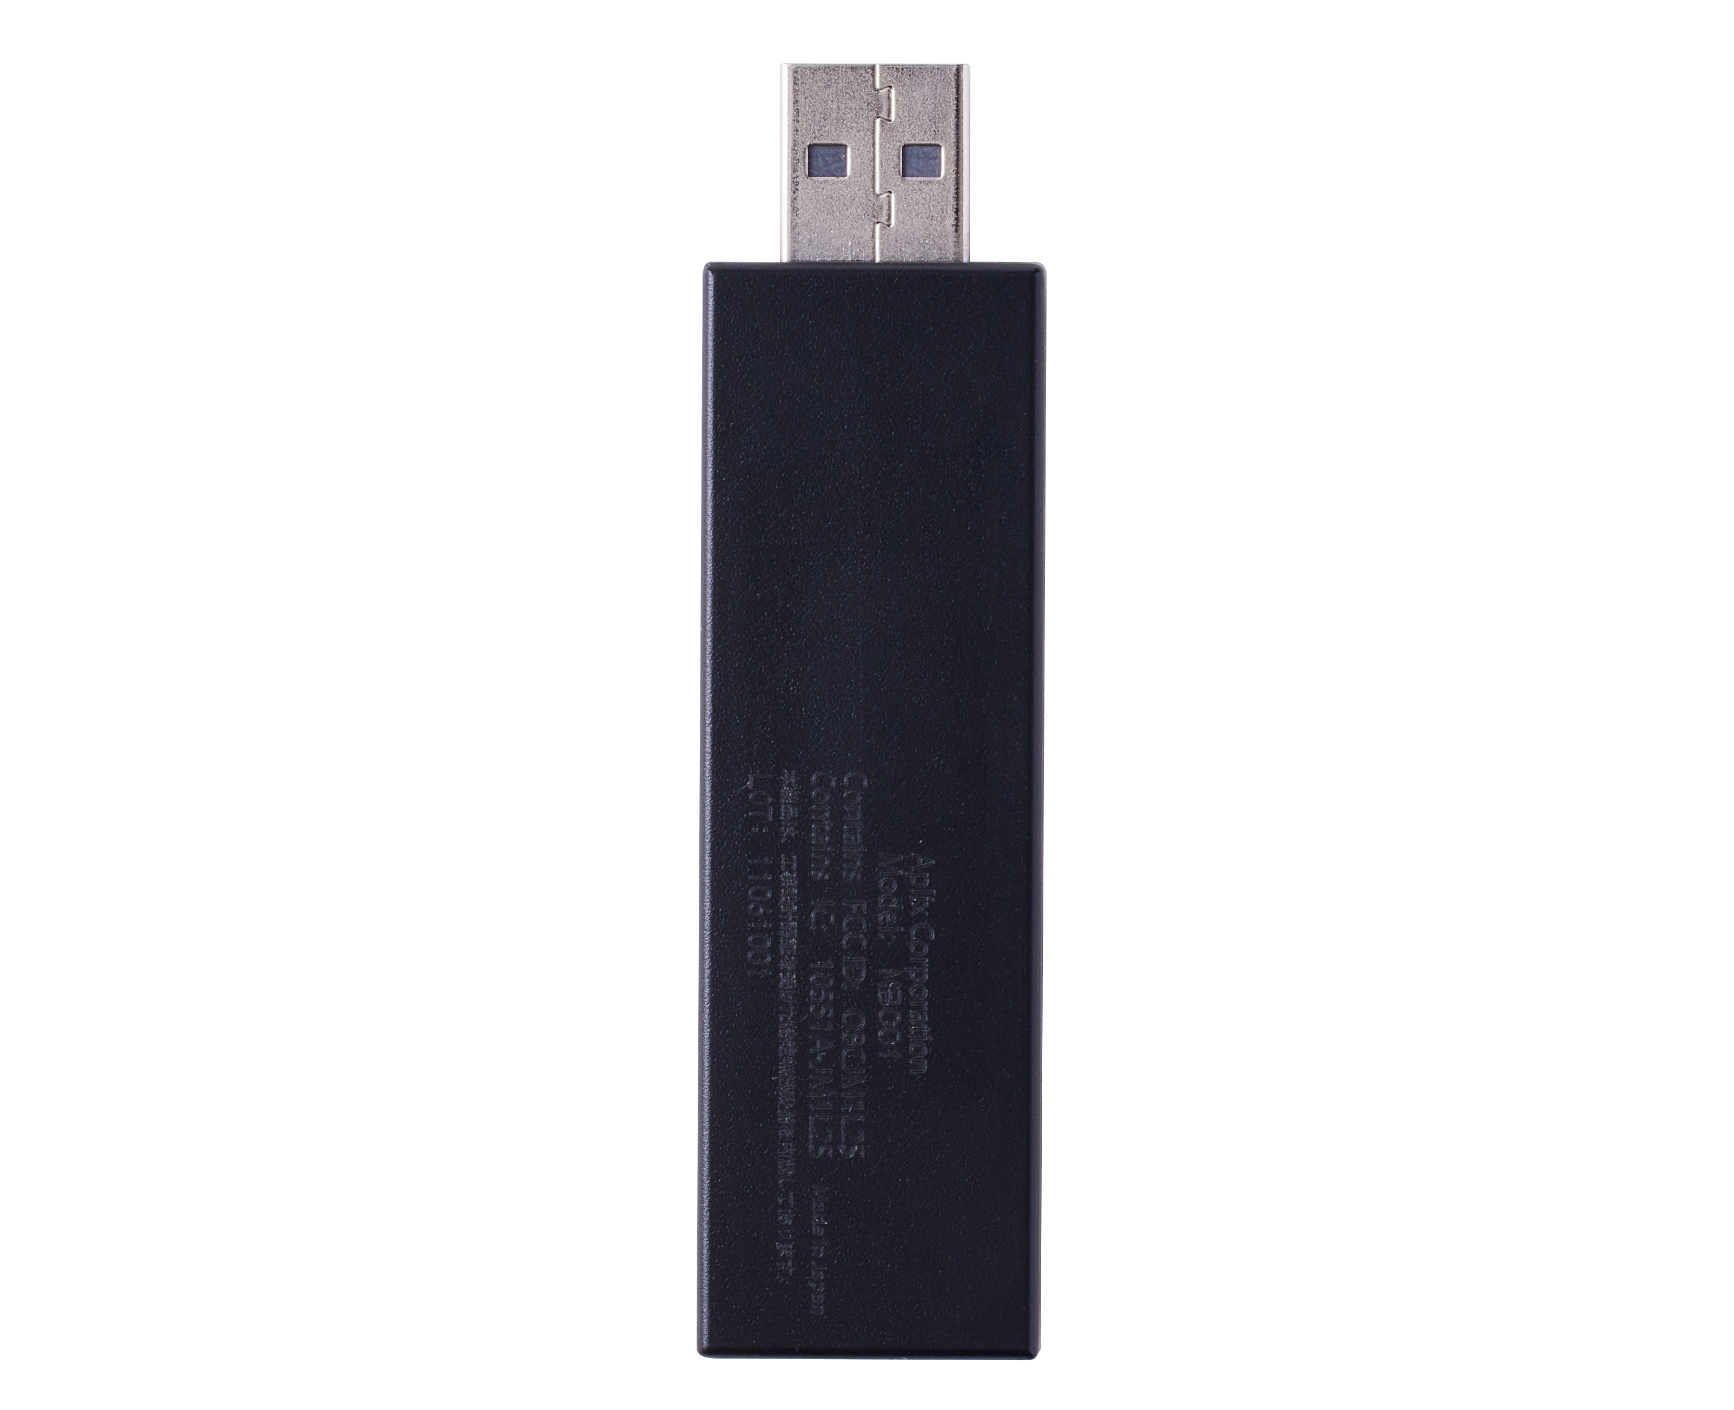 Aplix（アプリックス）のBeacon(ビーコン）「Mybeacon（マイビーコン）MyBeacon USBスティック型 MB001 Ac-SR2」